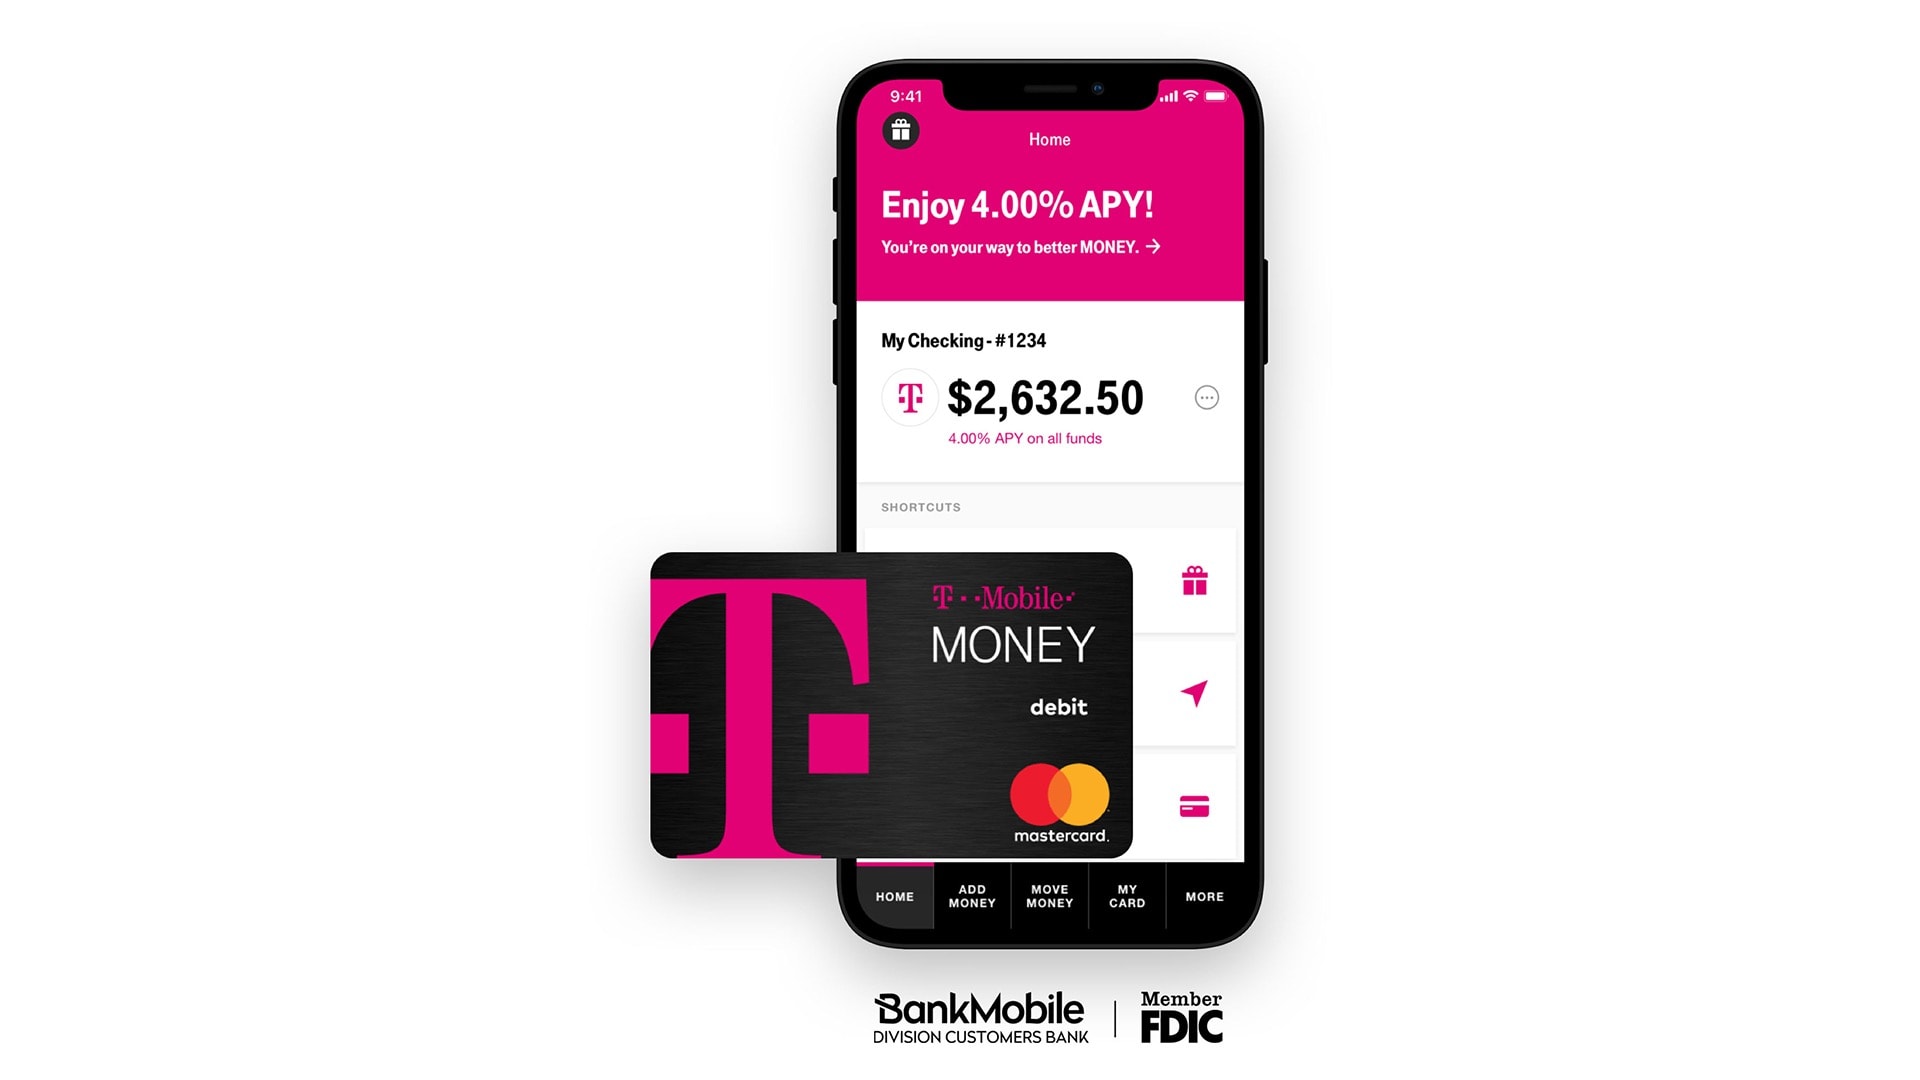 T-Mobile Money